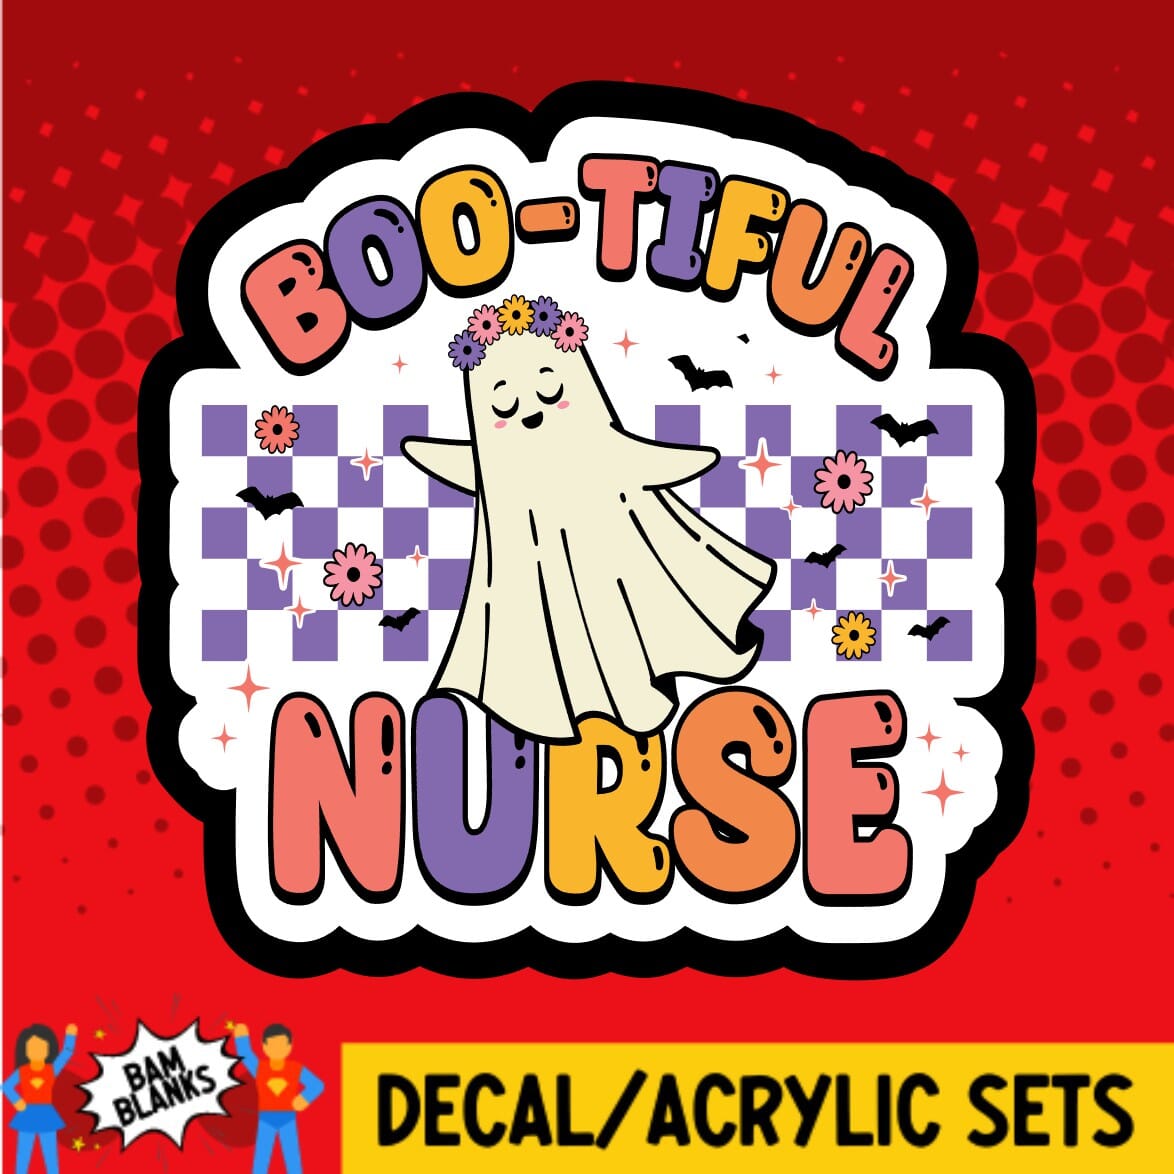 Boo-Tiful Nurse - DECAL AND ACRYLIC SHAPE #DA01330